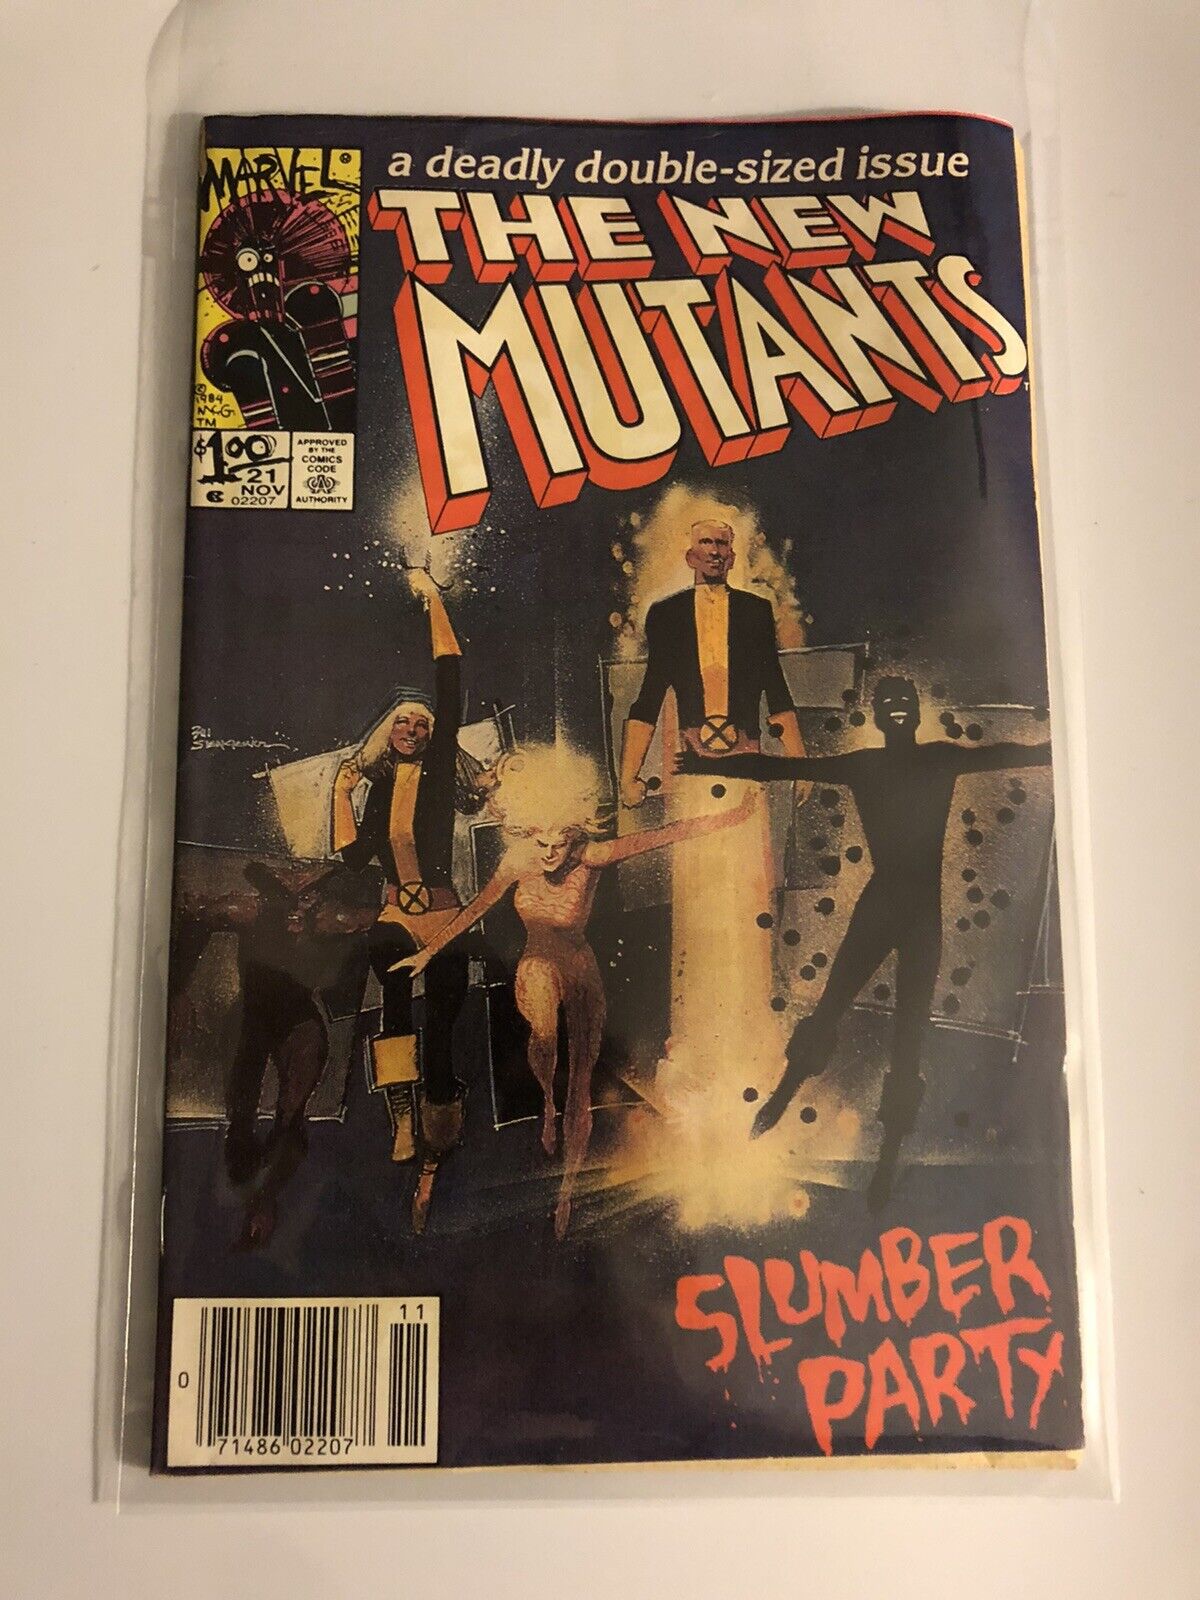 The New Mutants No. 21